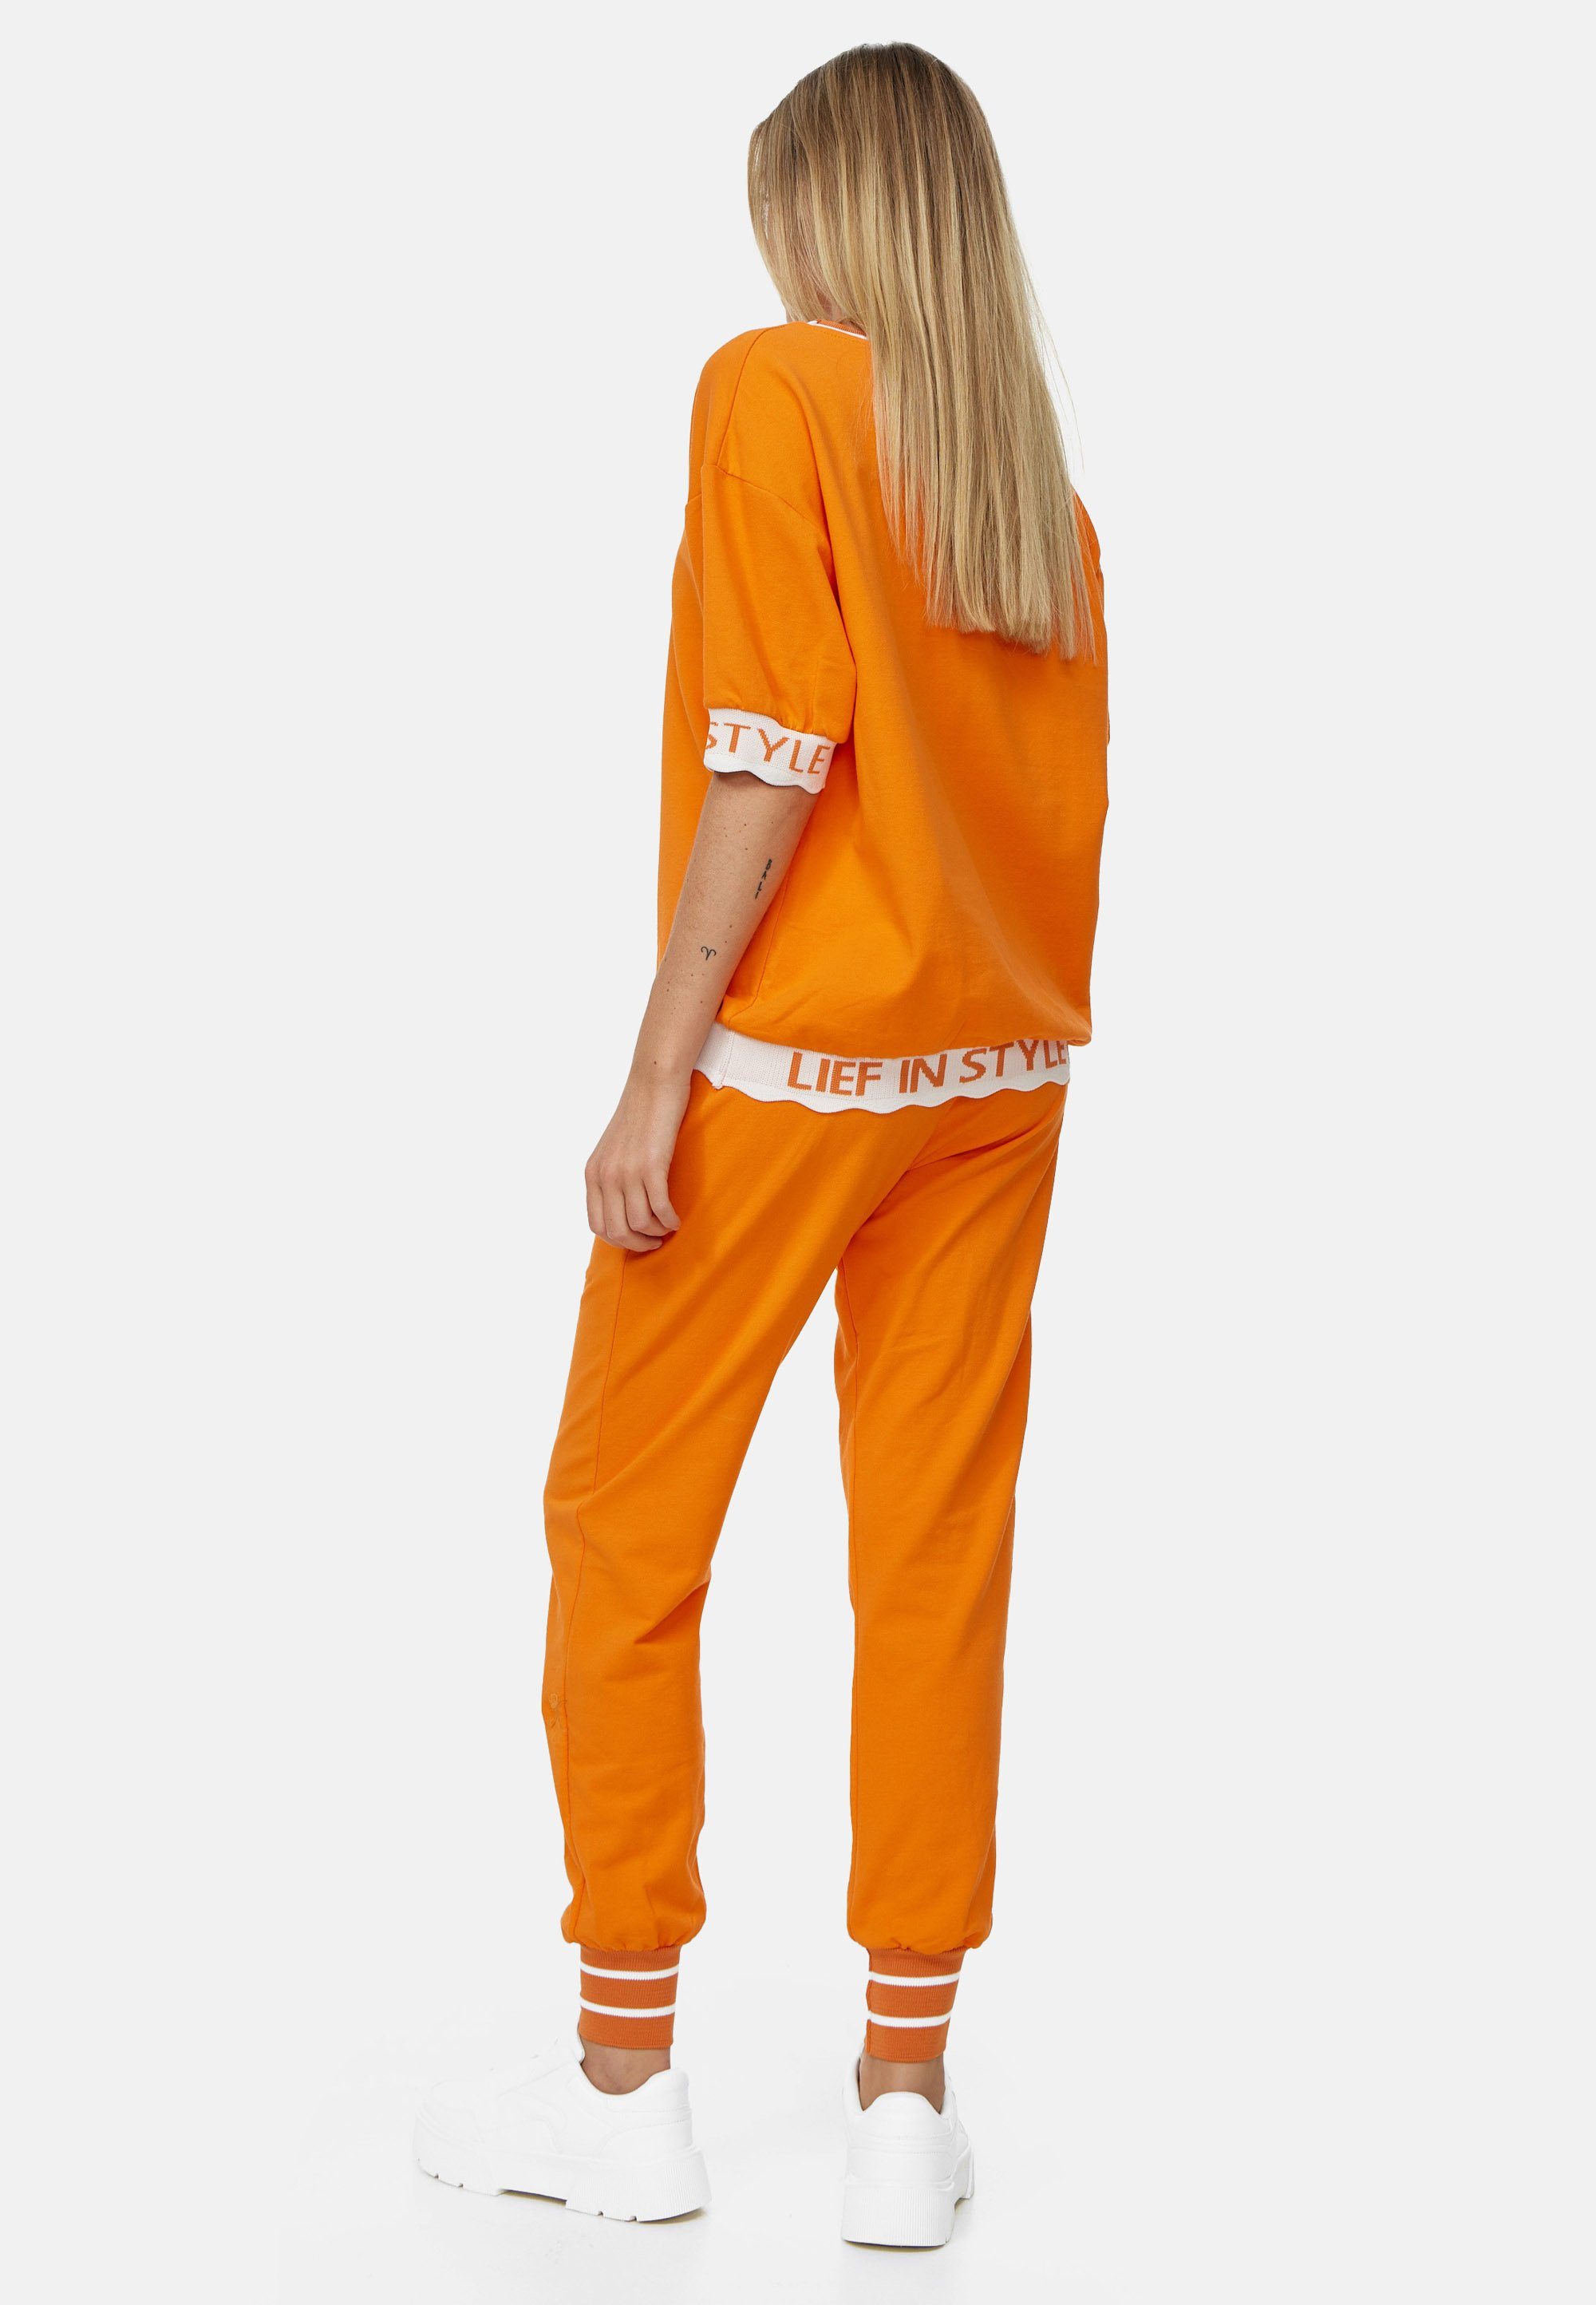 stylishem Schriftzug Decay orange T-Shirt mit